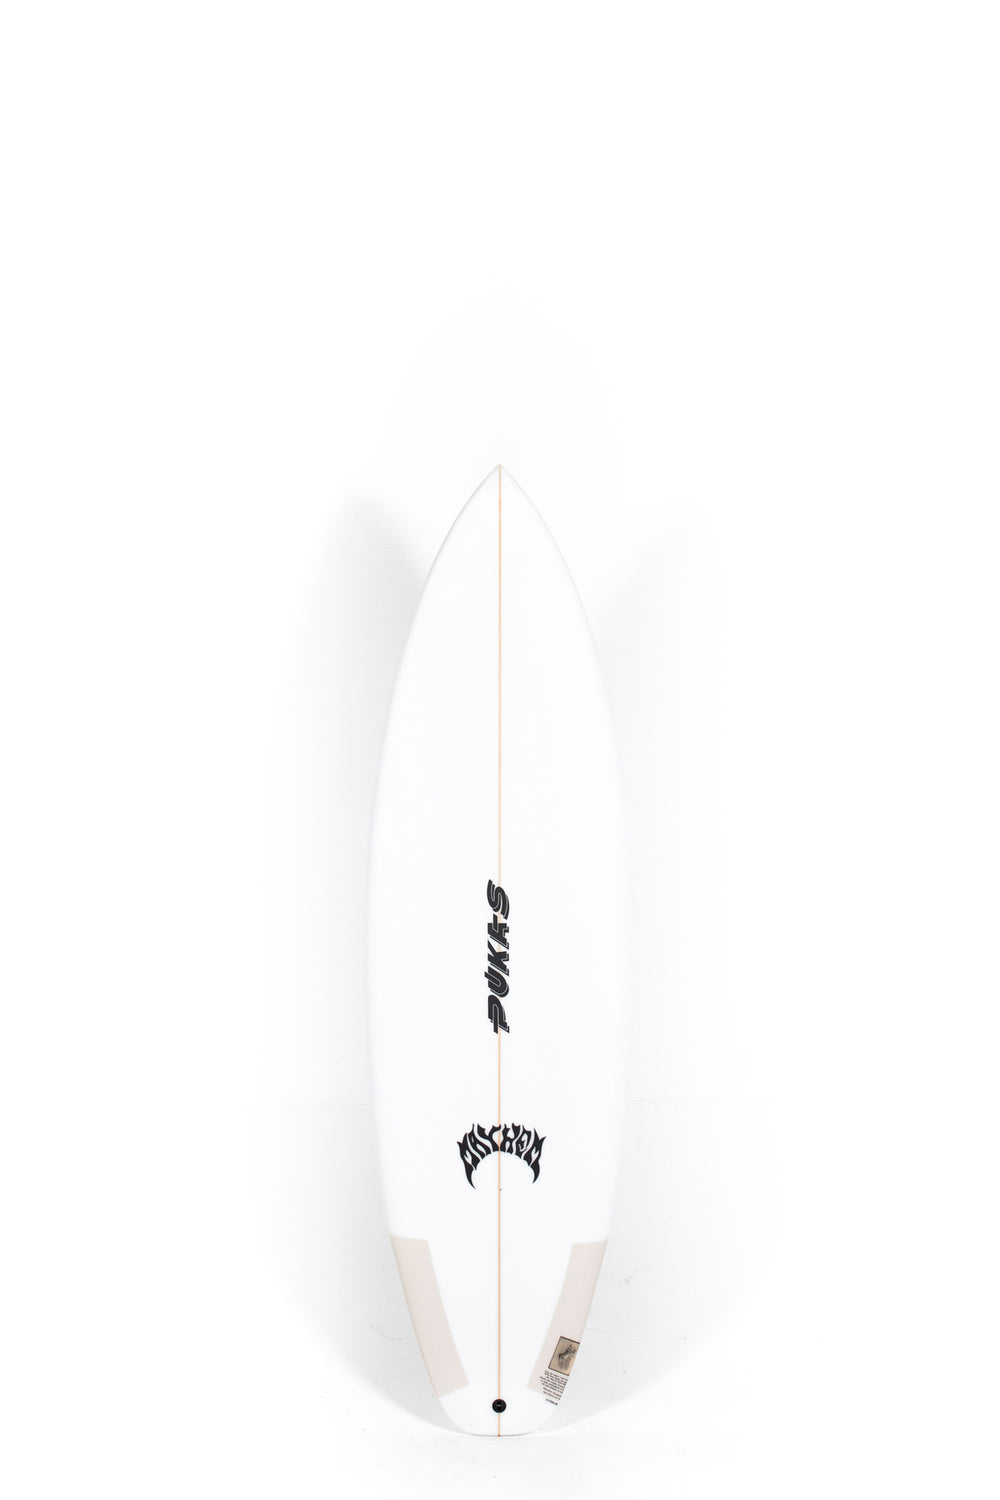 Pukas Surf Shop - Pukas Surfboard - HYPERLINK by Matt Biolos -  6'2